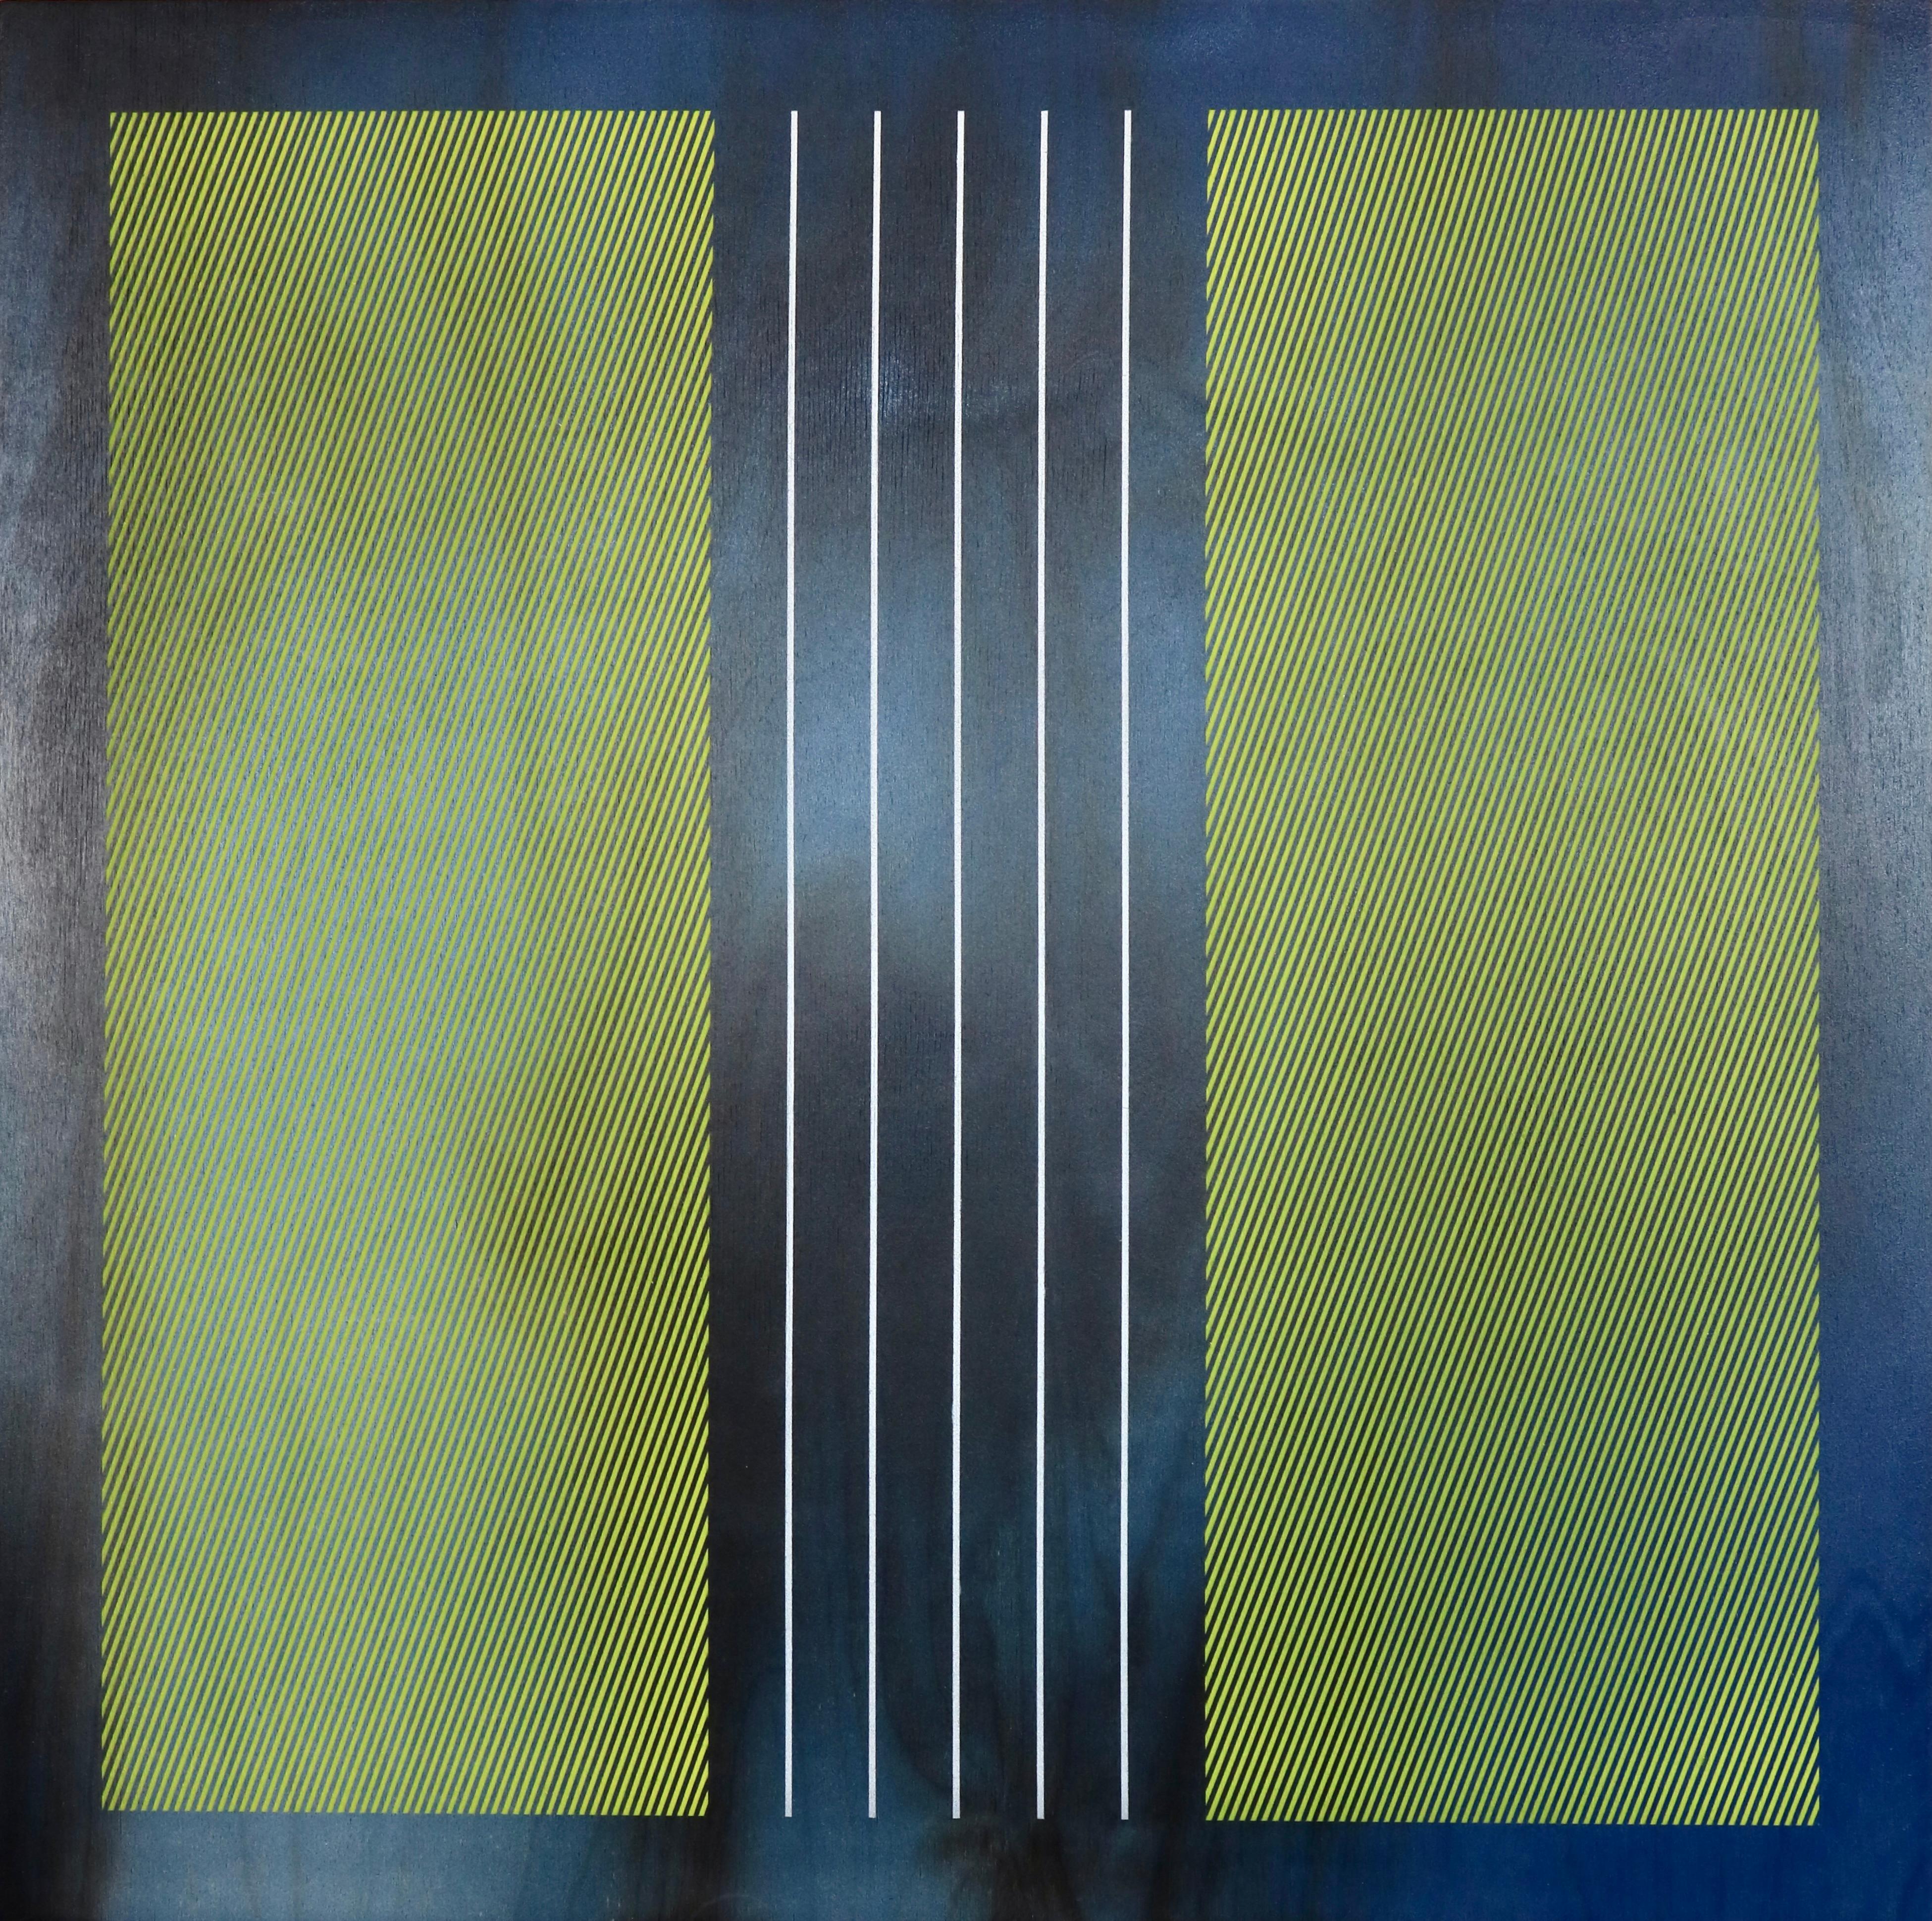 Square Mangata 2024.2 (lemon yellow grid, Navy blue, minimal, silver stripes) - Mixed Media Art by Melisa Taylor Metzger